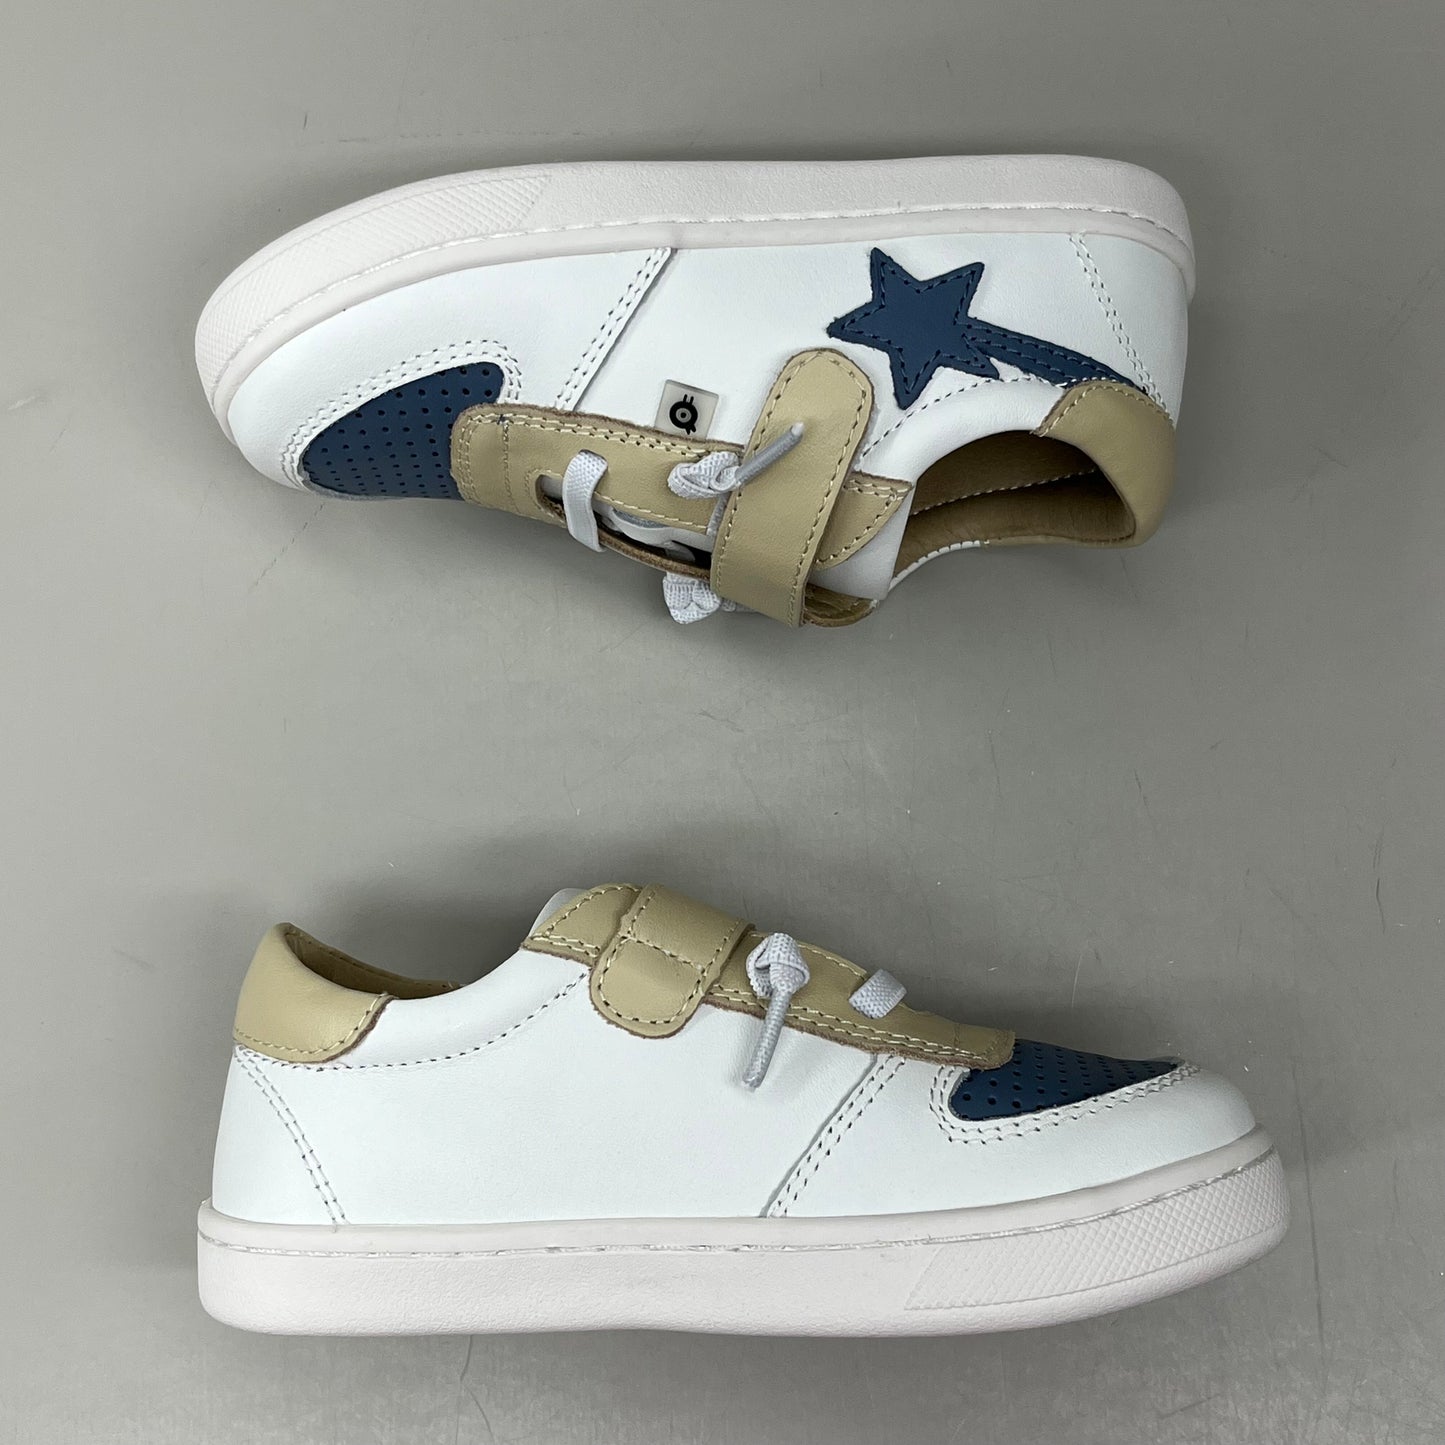 OLD SOLES Runsky Sneakers Leather Shoe Kid’s Sz 24 US 8 Cream/Indigo/Snow #6135